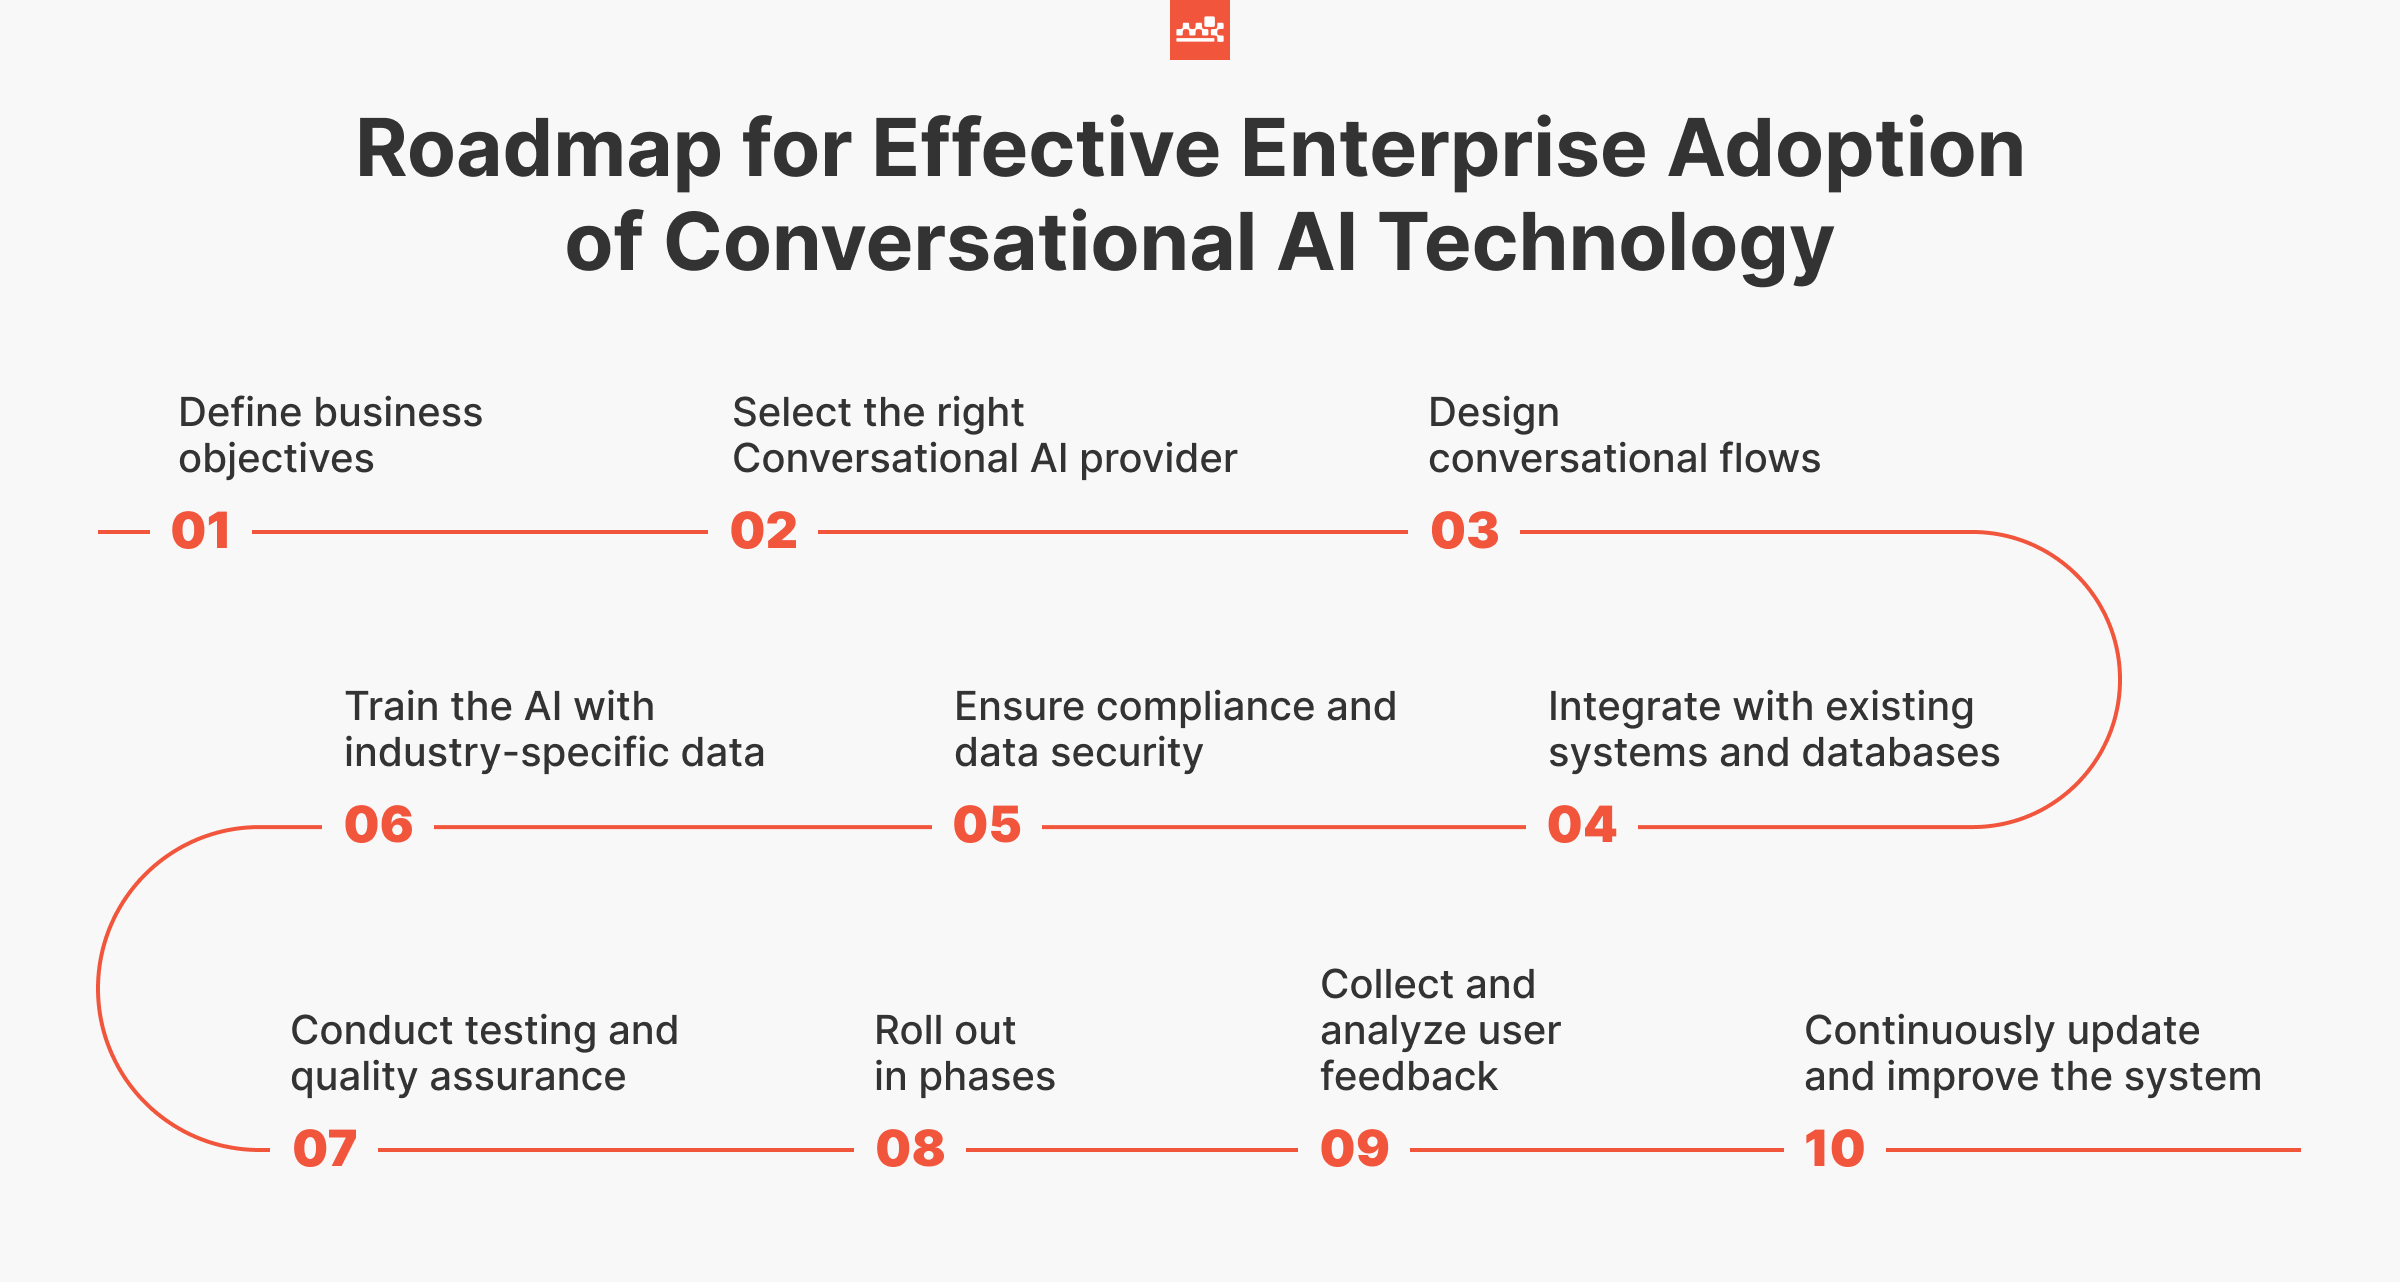 Roadmap for Enterprise Adoption of Conversational AI Technology